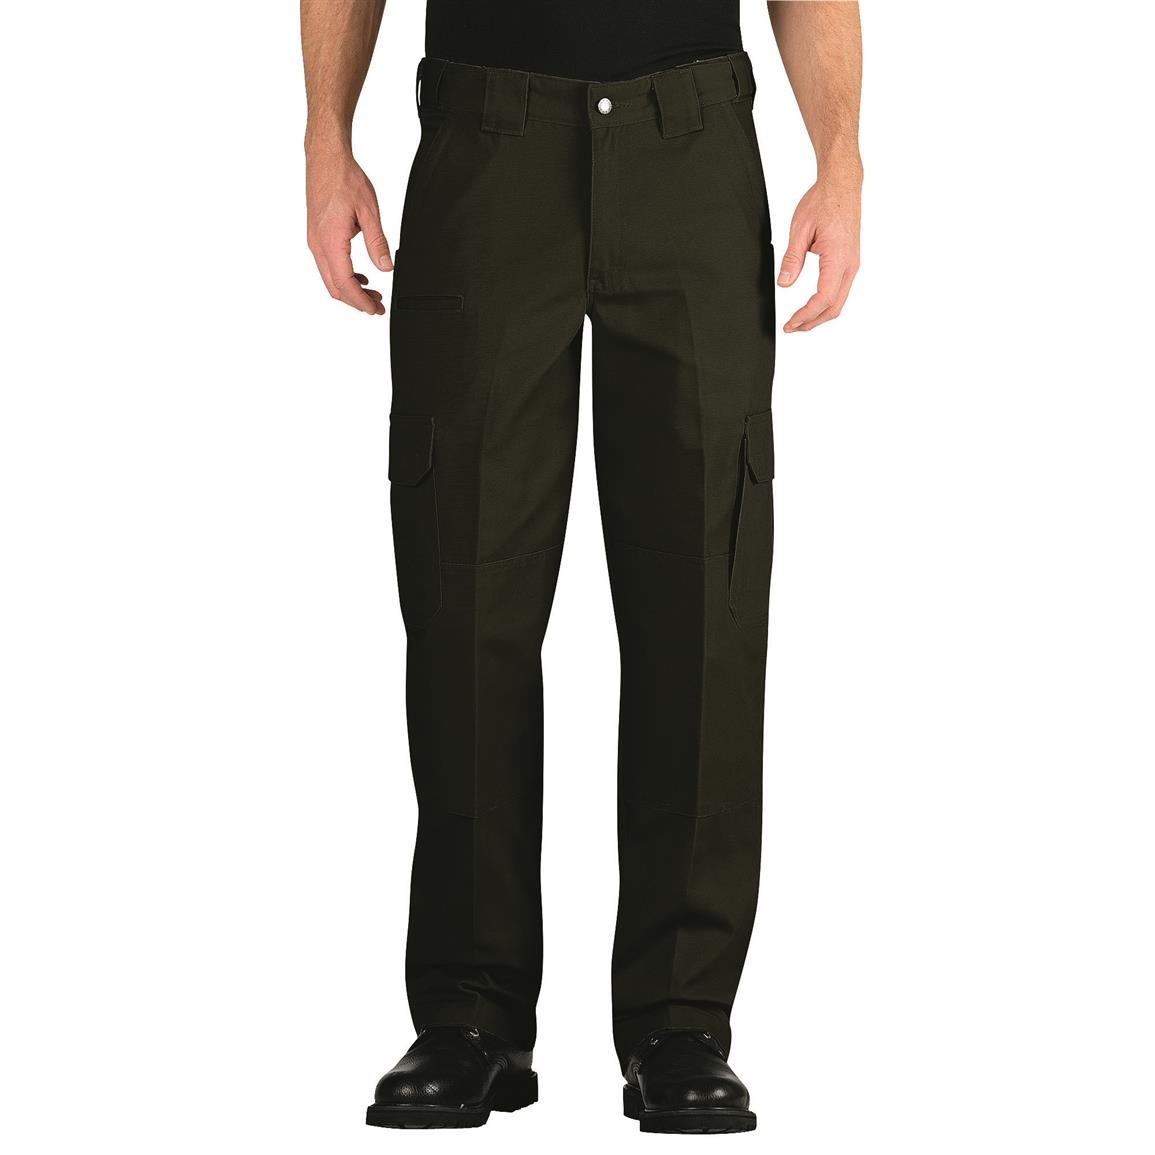 Dickies Men's Canvas Tactical Pants - 681125, Tactical Clothing at ...